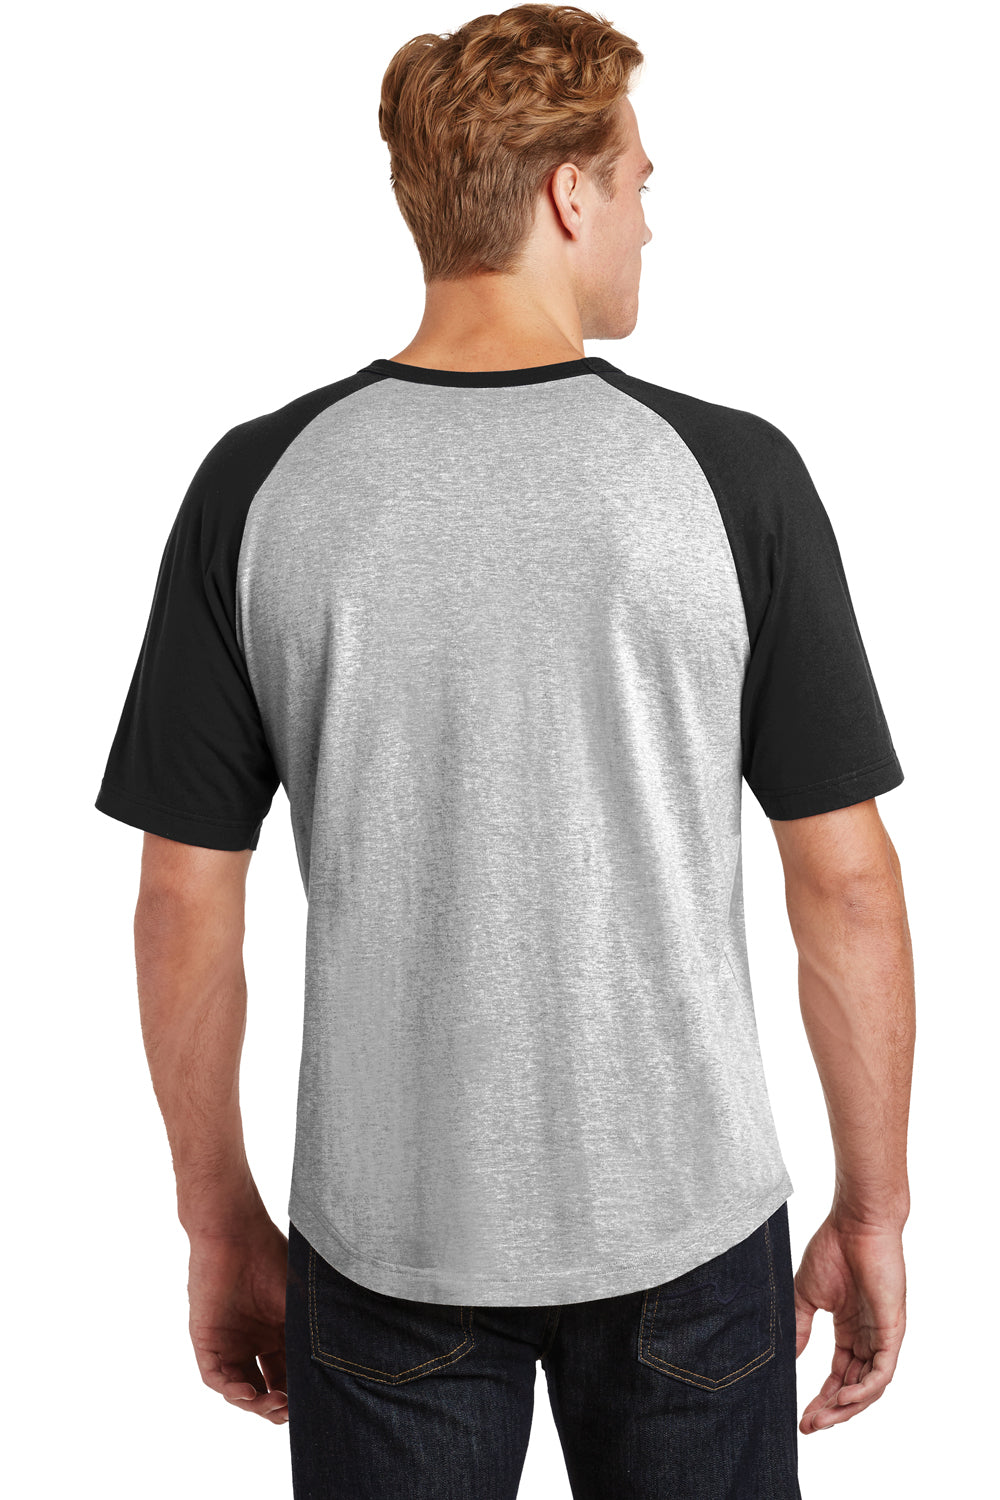 Sport-Tek T201 Mens Short Sleeve Crewneck T-Shirt Heather Grey/Black Back